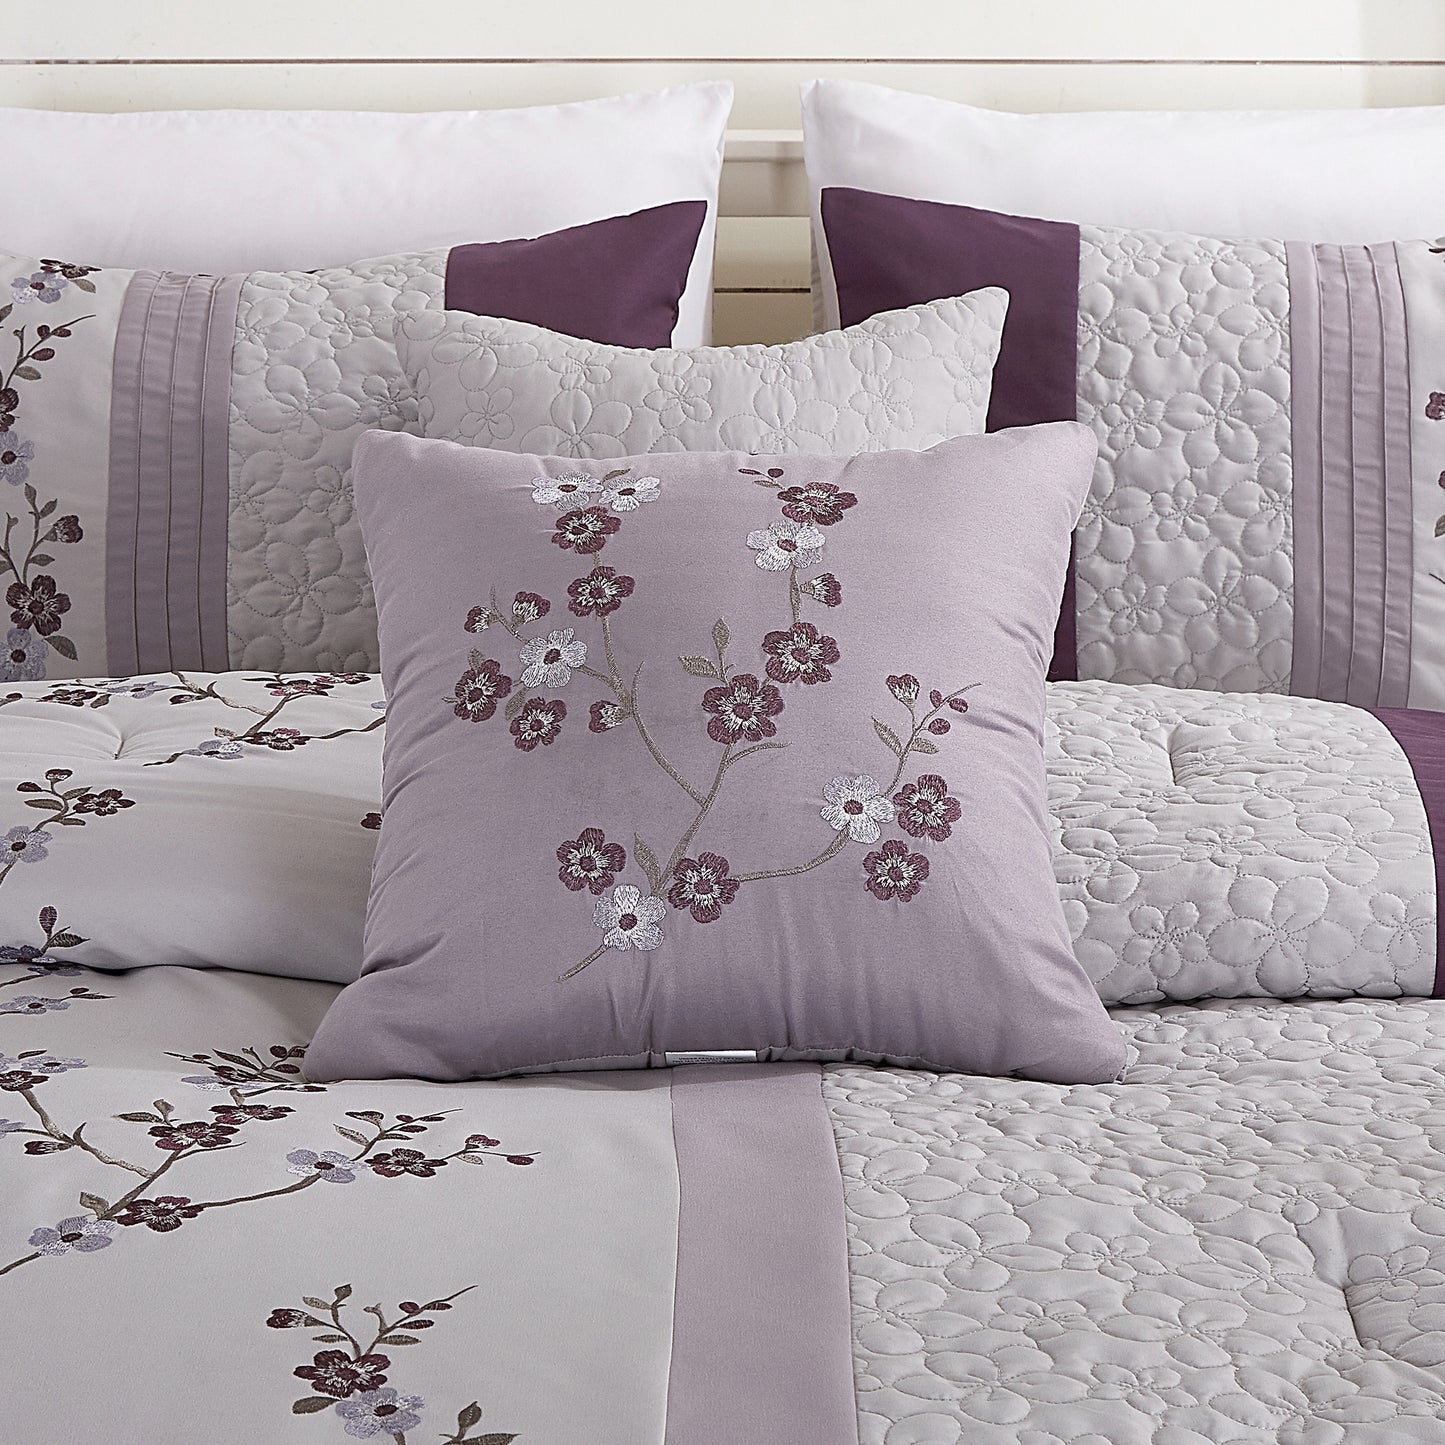 Linnea 7-Piece Cherry Blossom Floral Embroidery Comforter Set